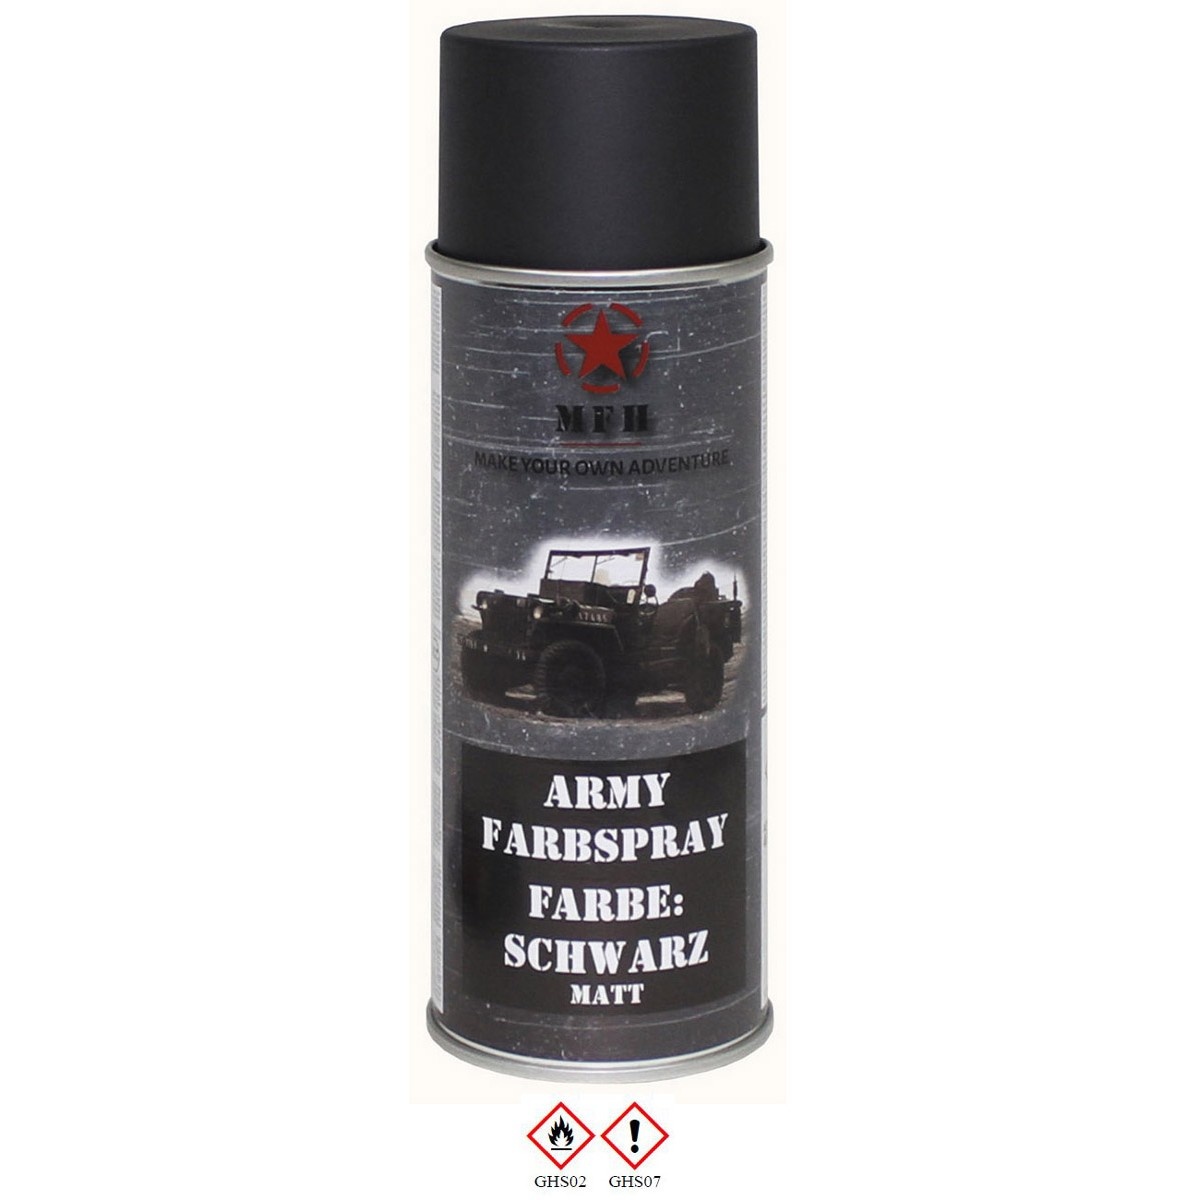 MFH Camouflage Army Paint Spray matt - black